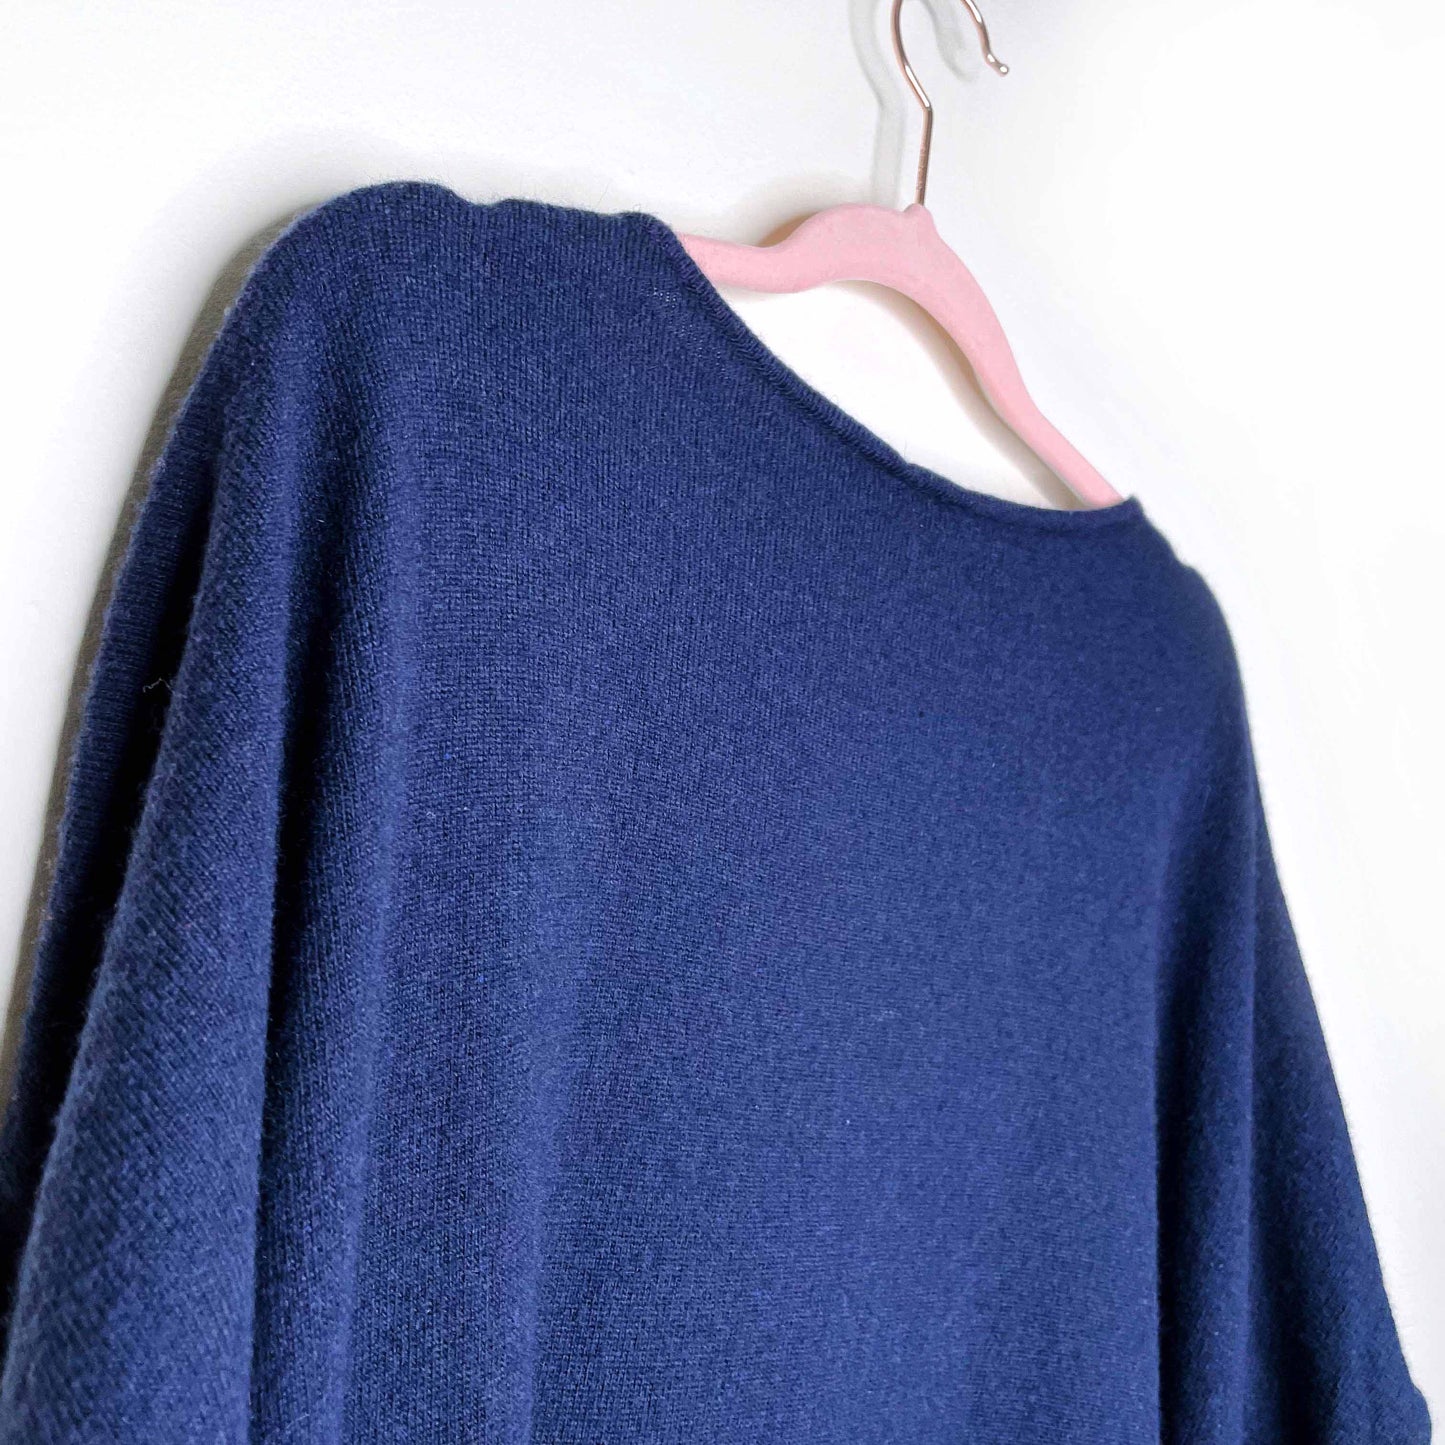 armani jeans navy blue wool-cashmere sweater - size xs